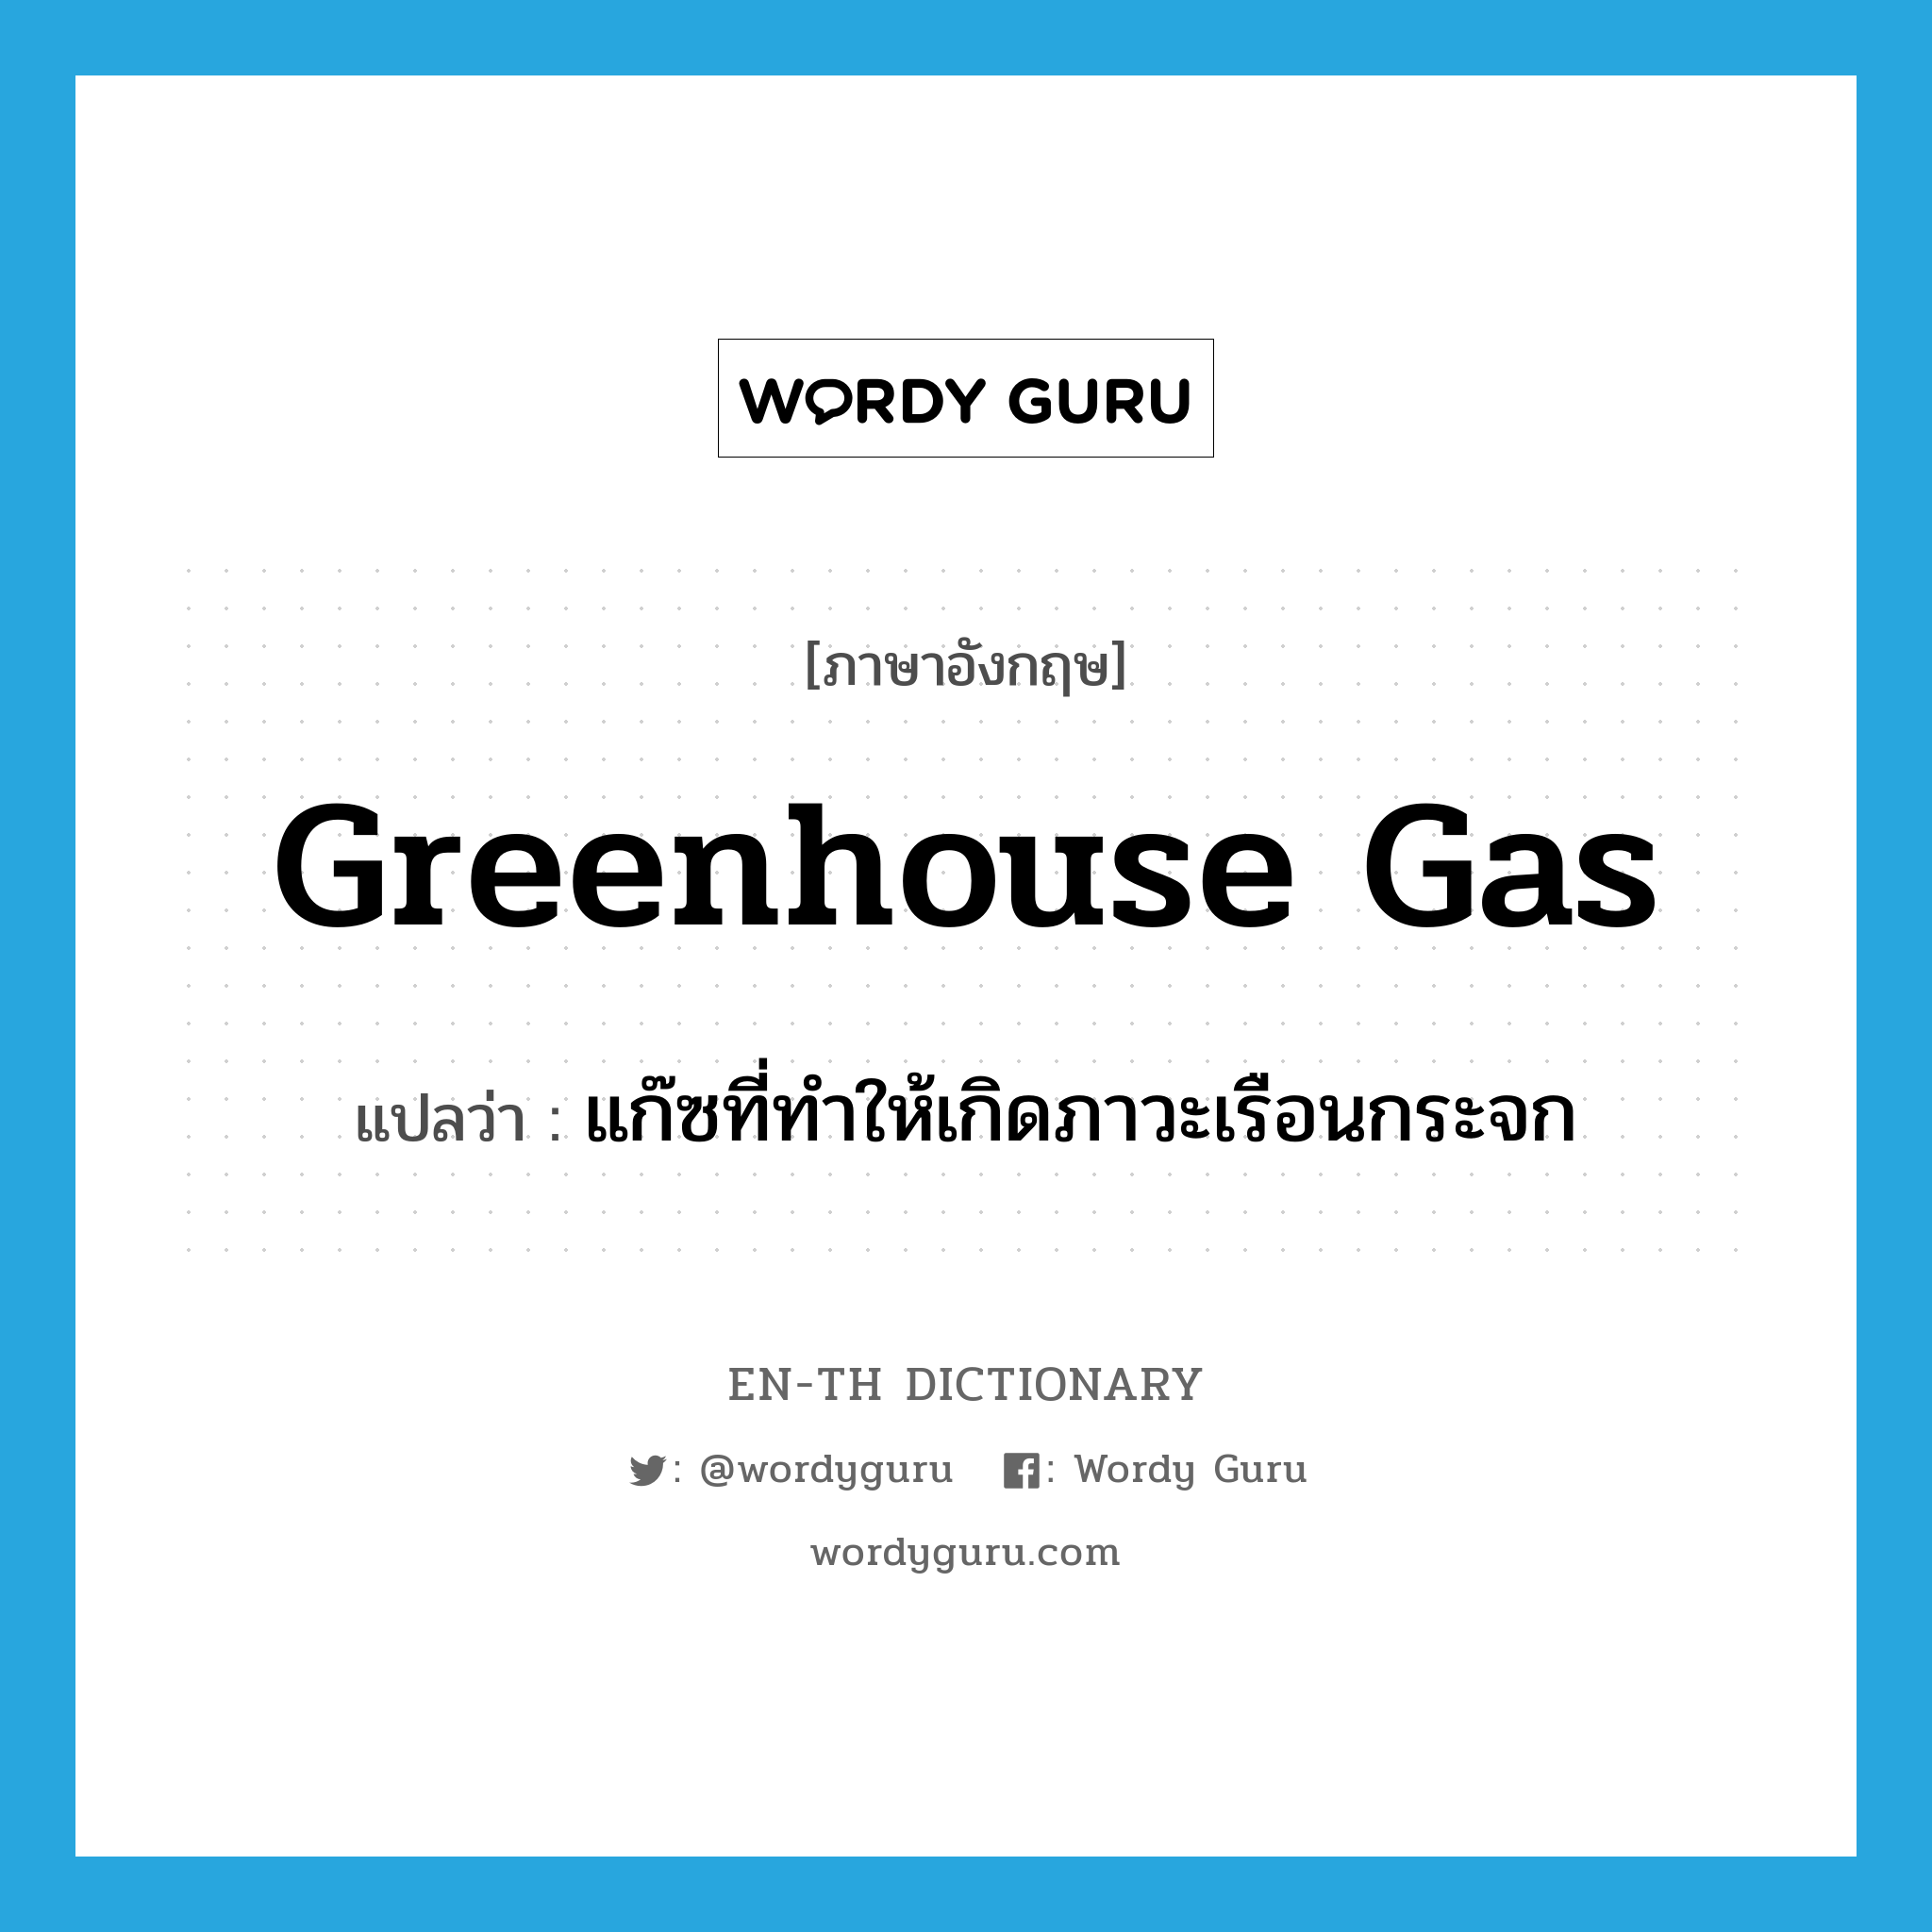 greenhouse gas